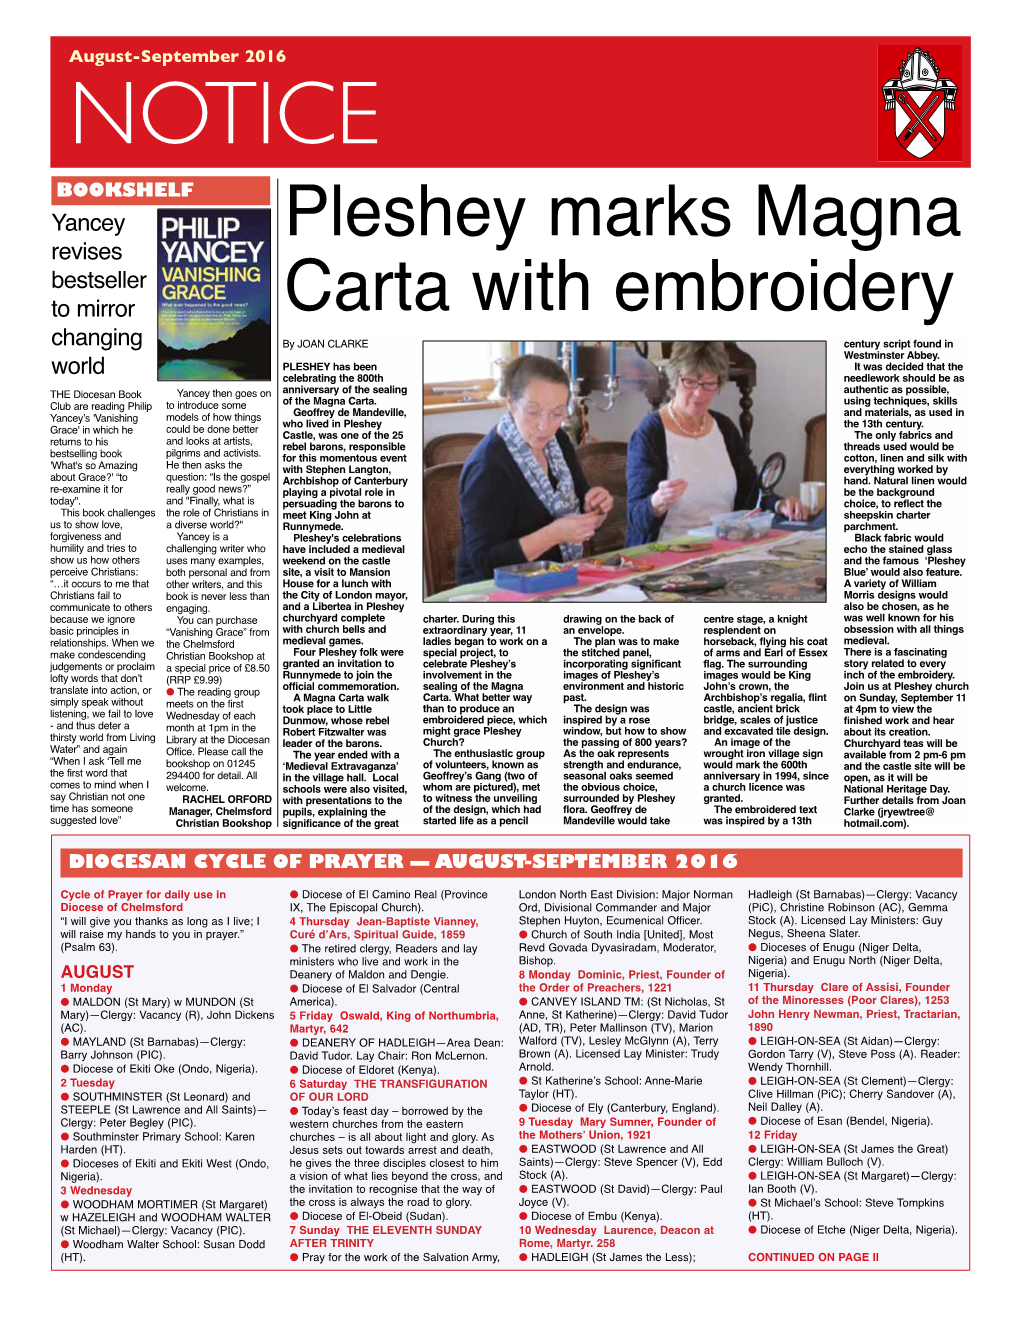 Pleshey Marks Magna Carta with Embroidery